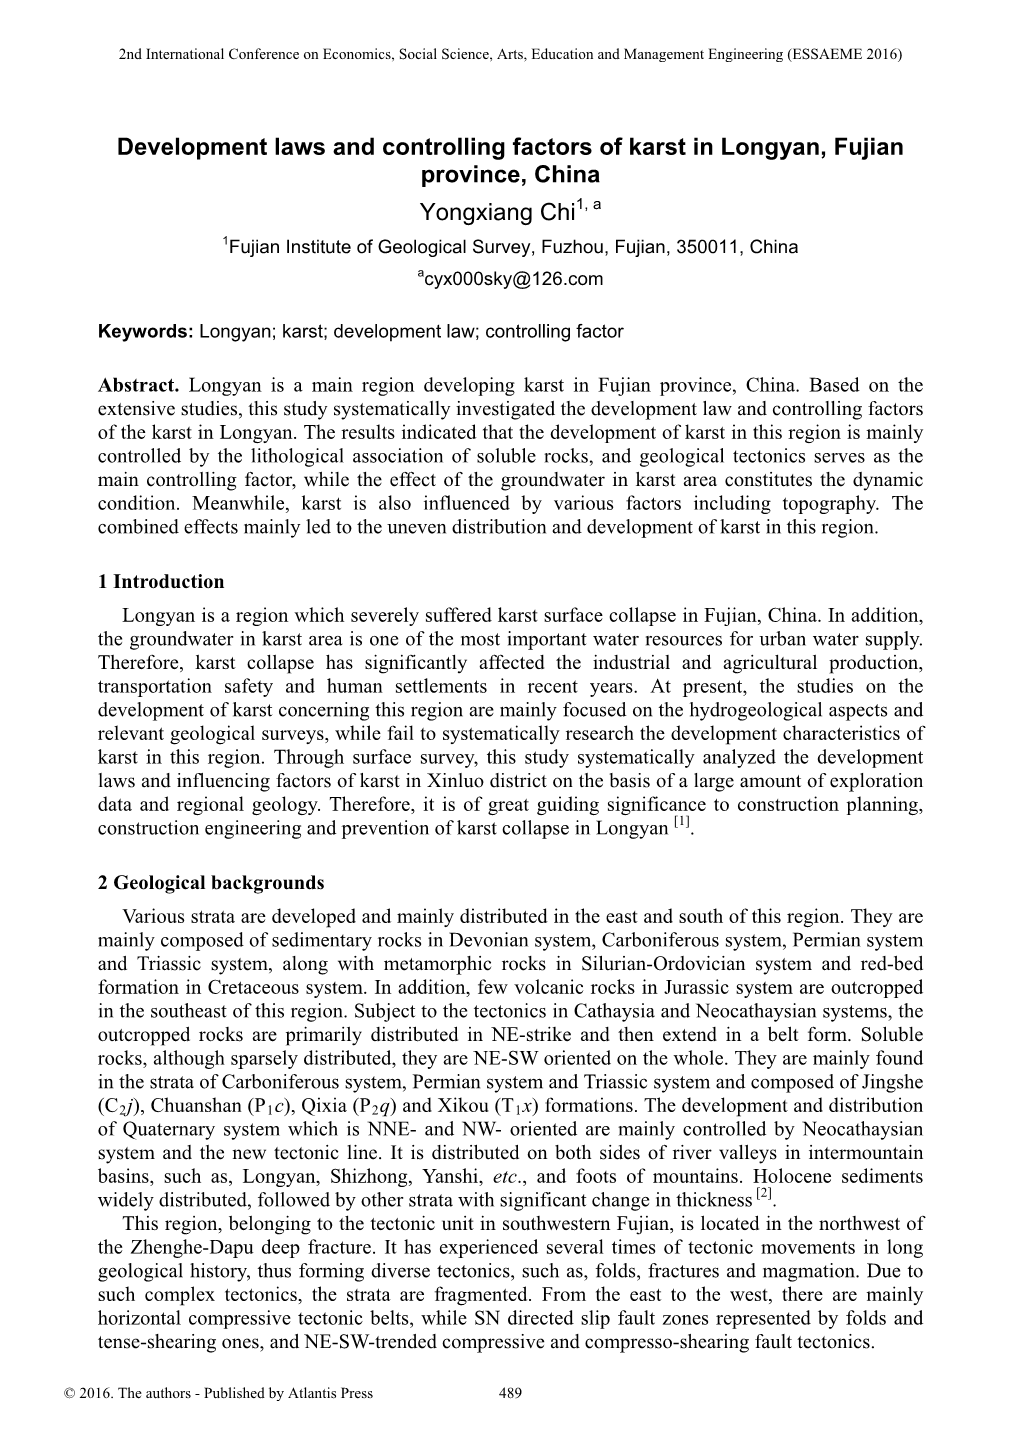 Development Laws and Controlling Factors of Karst in Longyan, Fujian